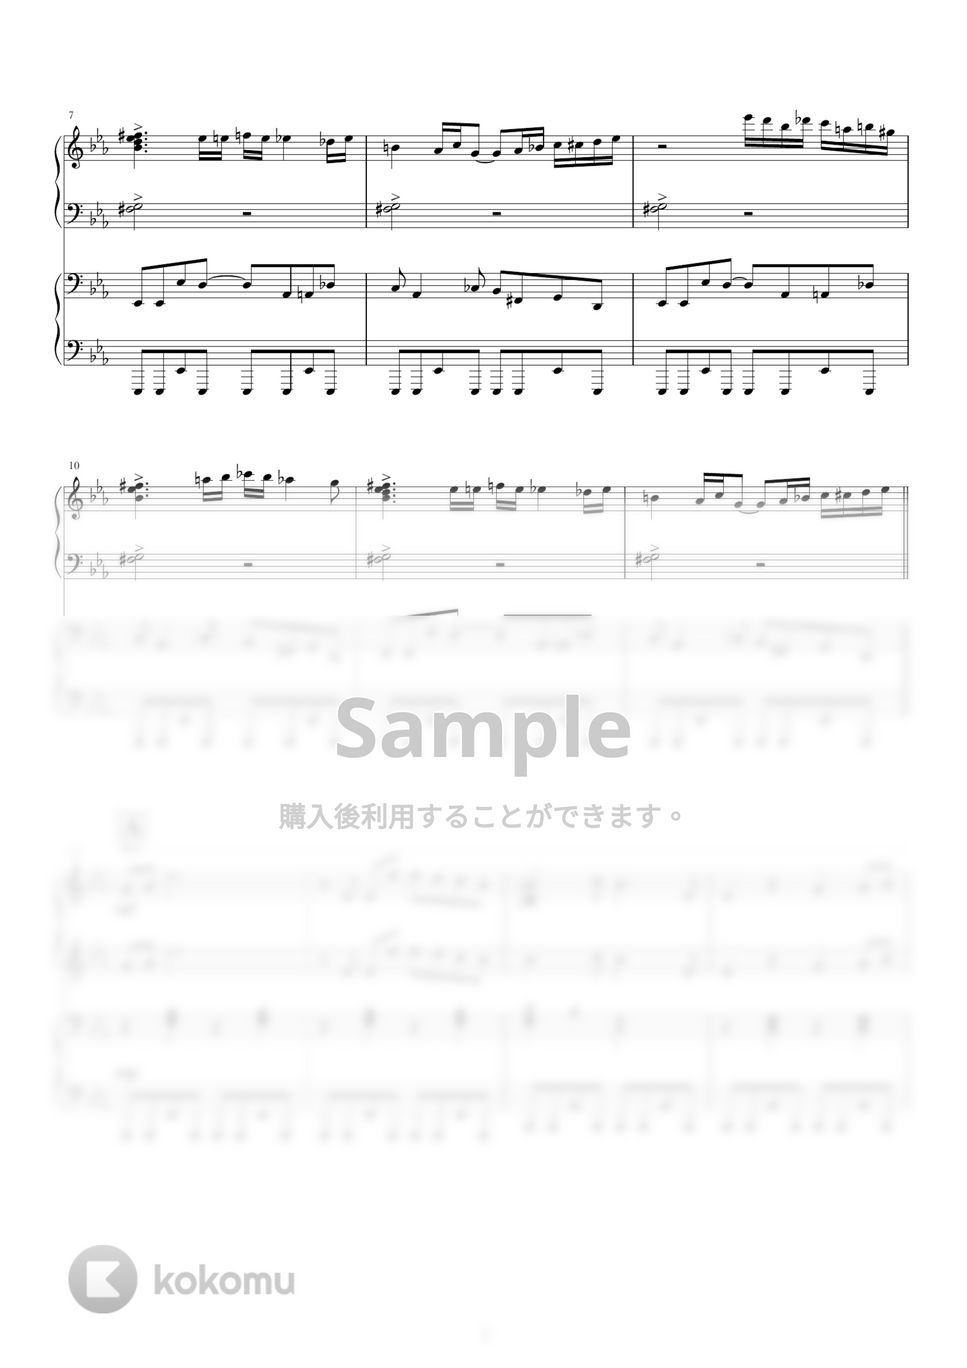 Official髭男dism - ホワイトノイズ (ピアノ連弾/東京リベンジャーズ) by norimaki